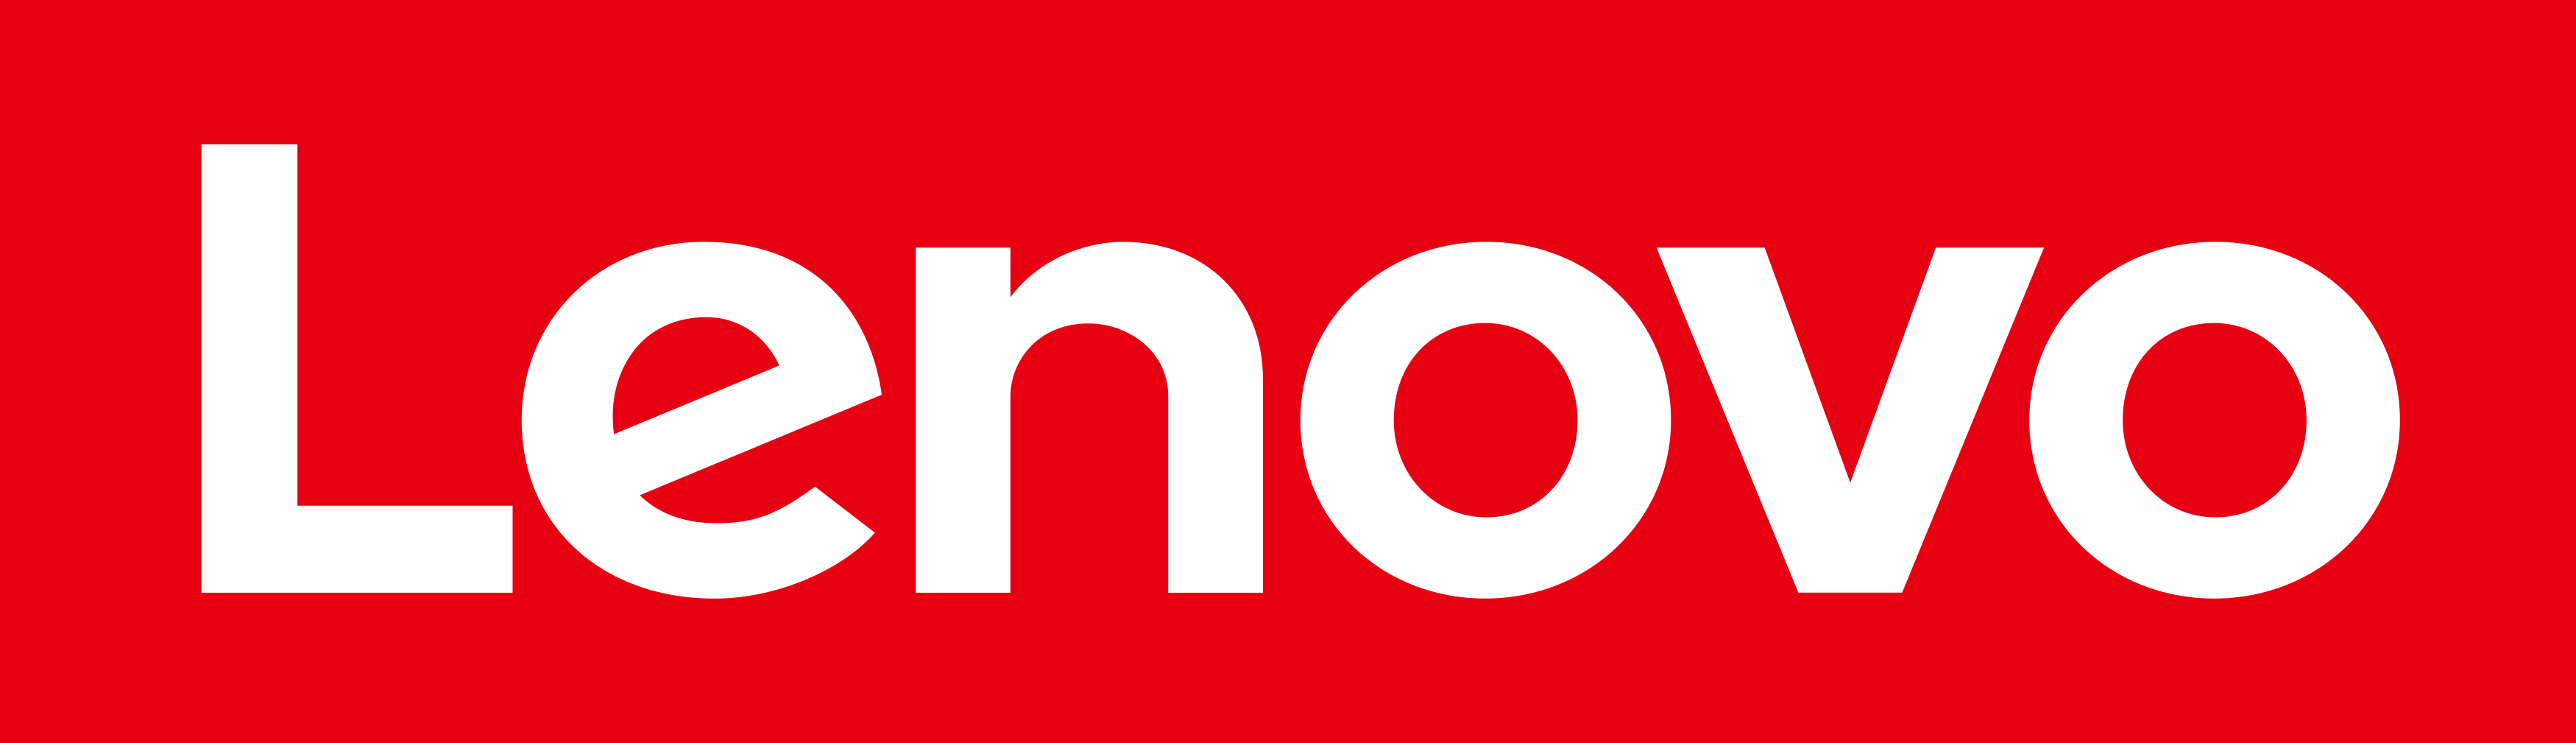 Lenovo Singapore coupons logo